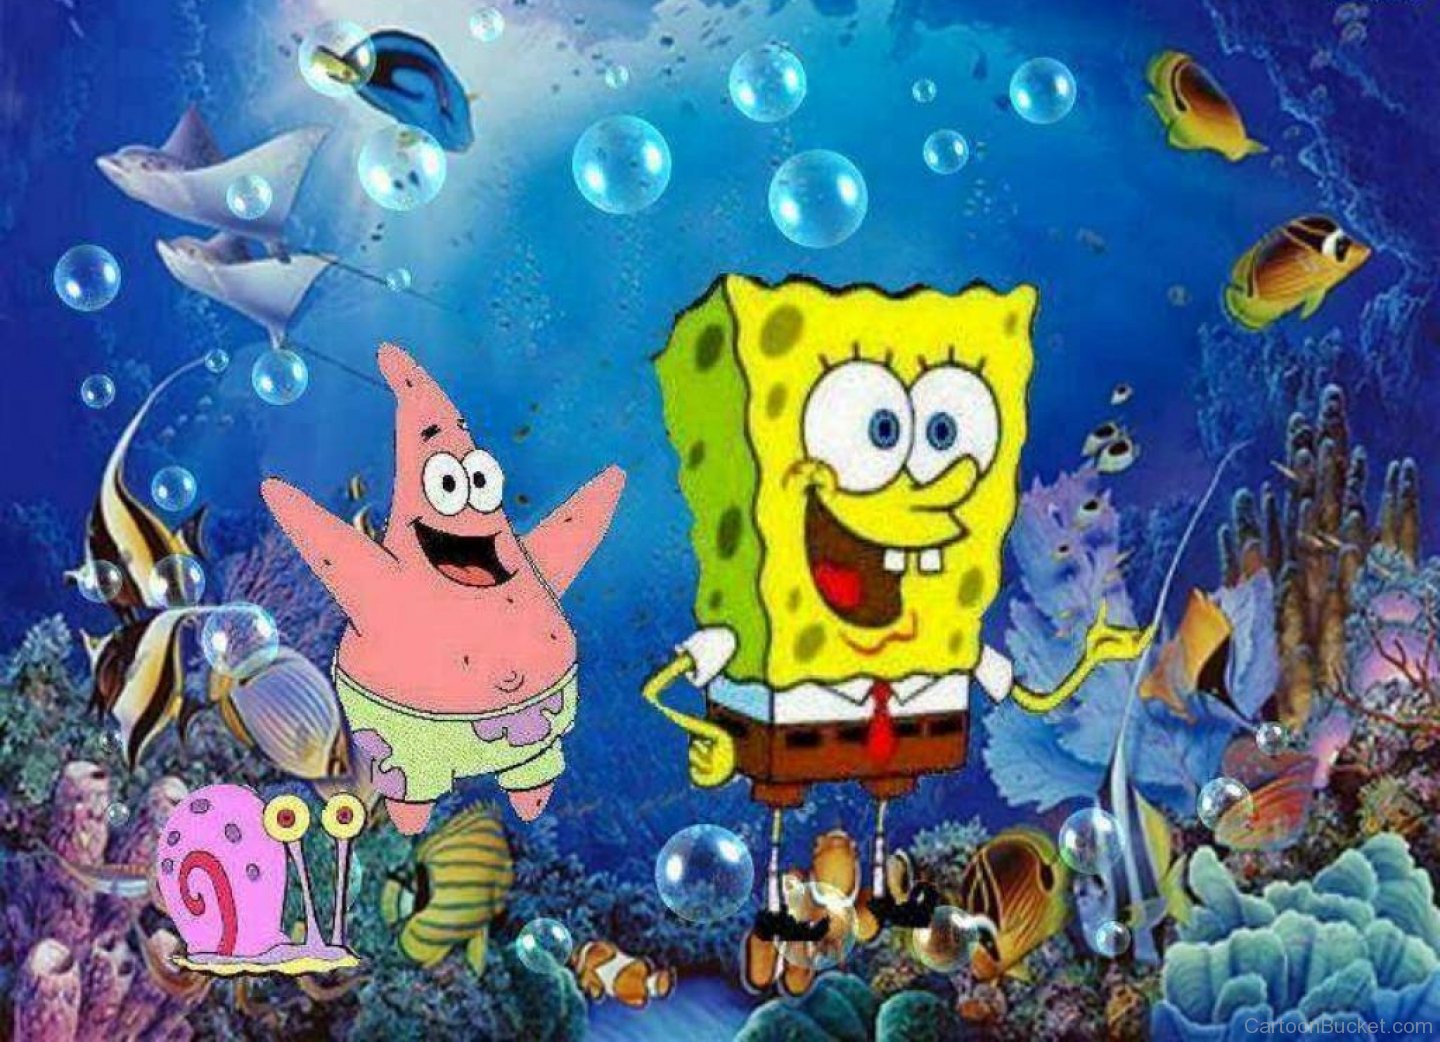 Spongebob,Patrick And Gary Having Fun In Underwater.